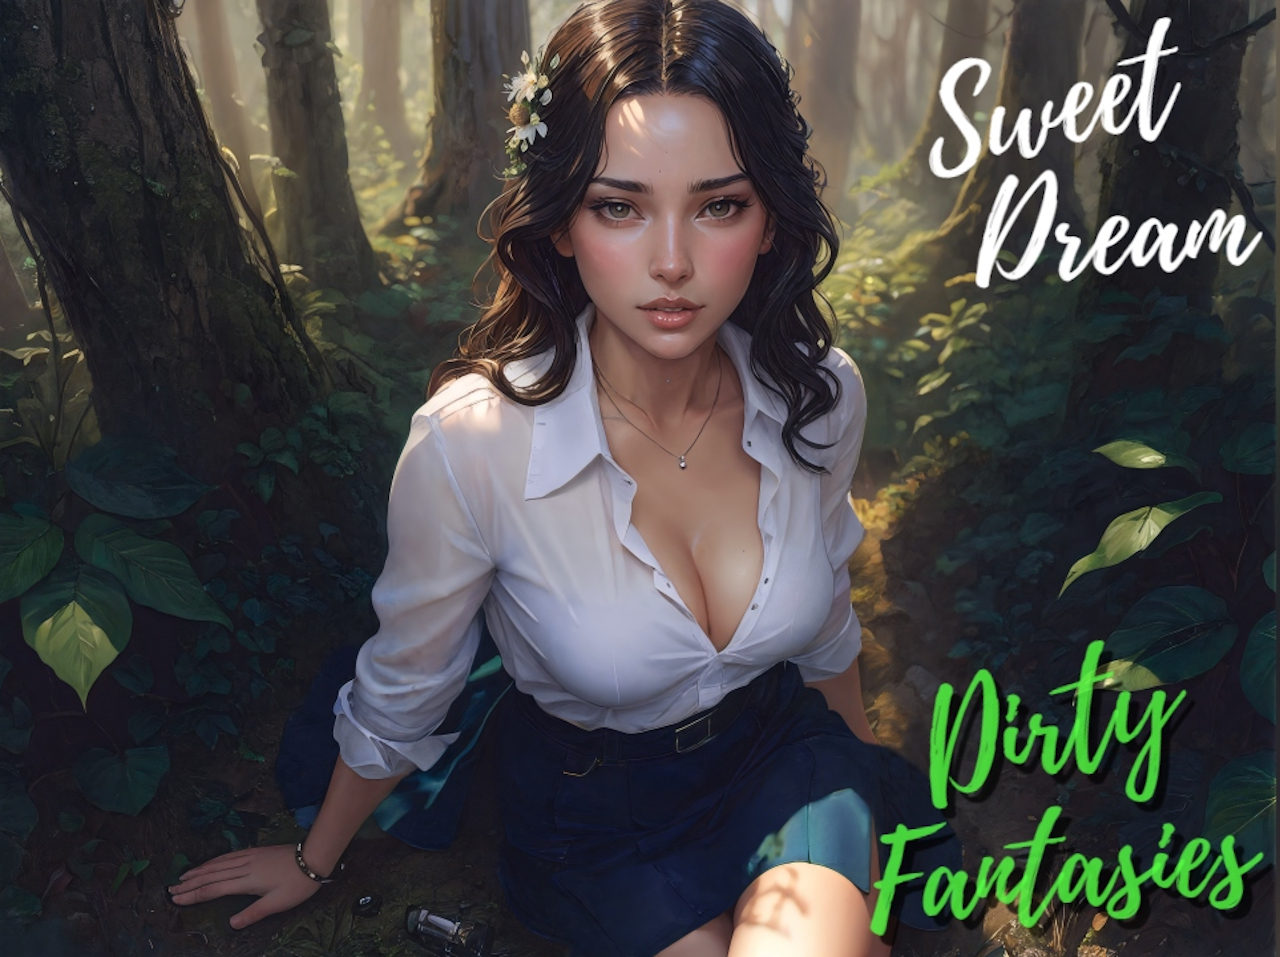 Dirty Fantasies: Sweet Dream